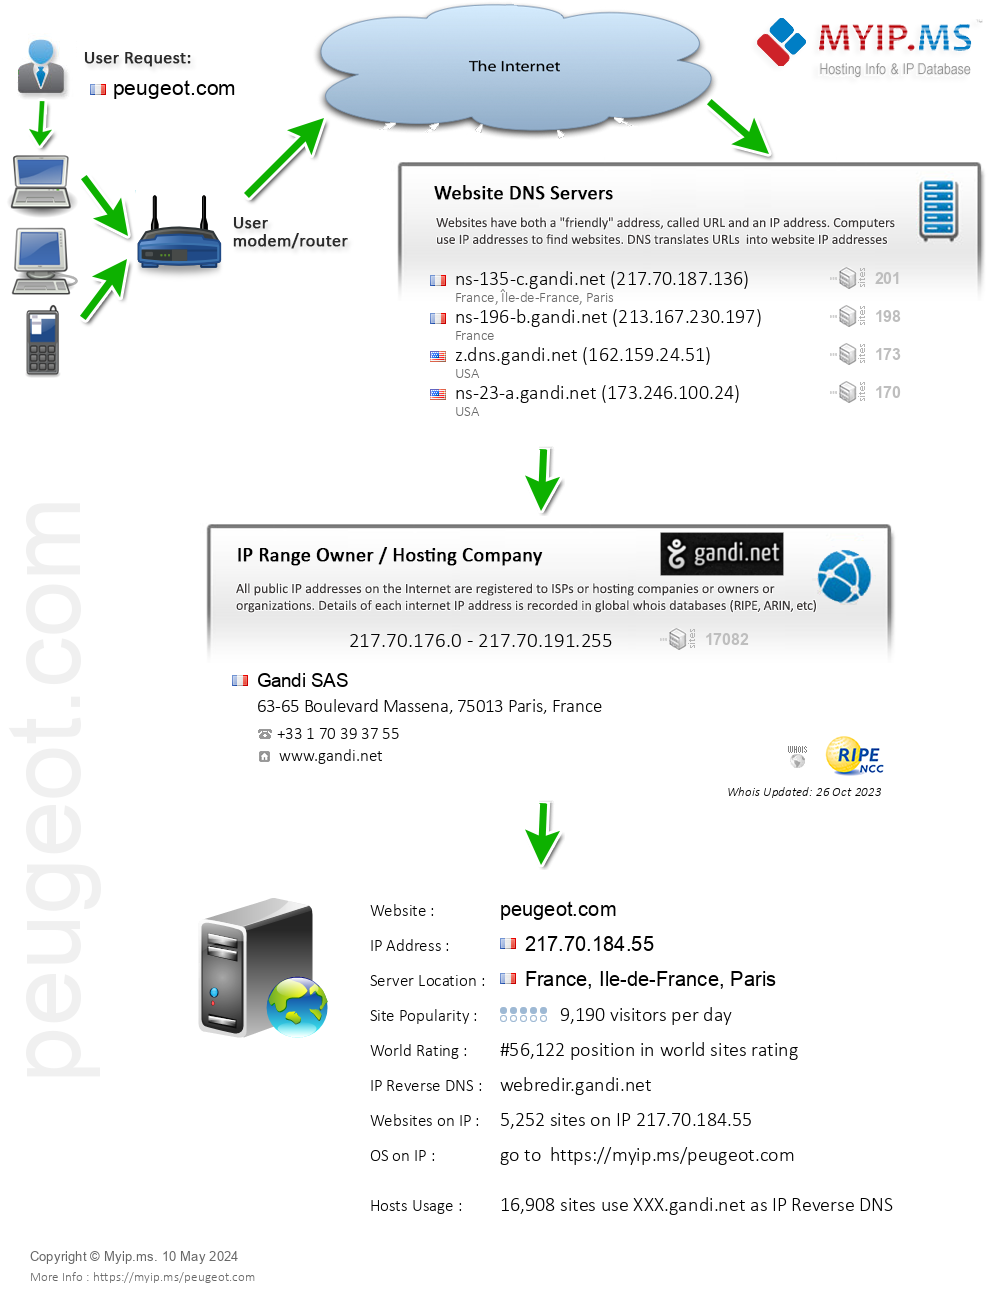 Peugeot.com - Website Hosting Visual IP Diagram